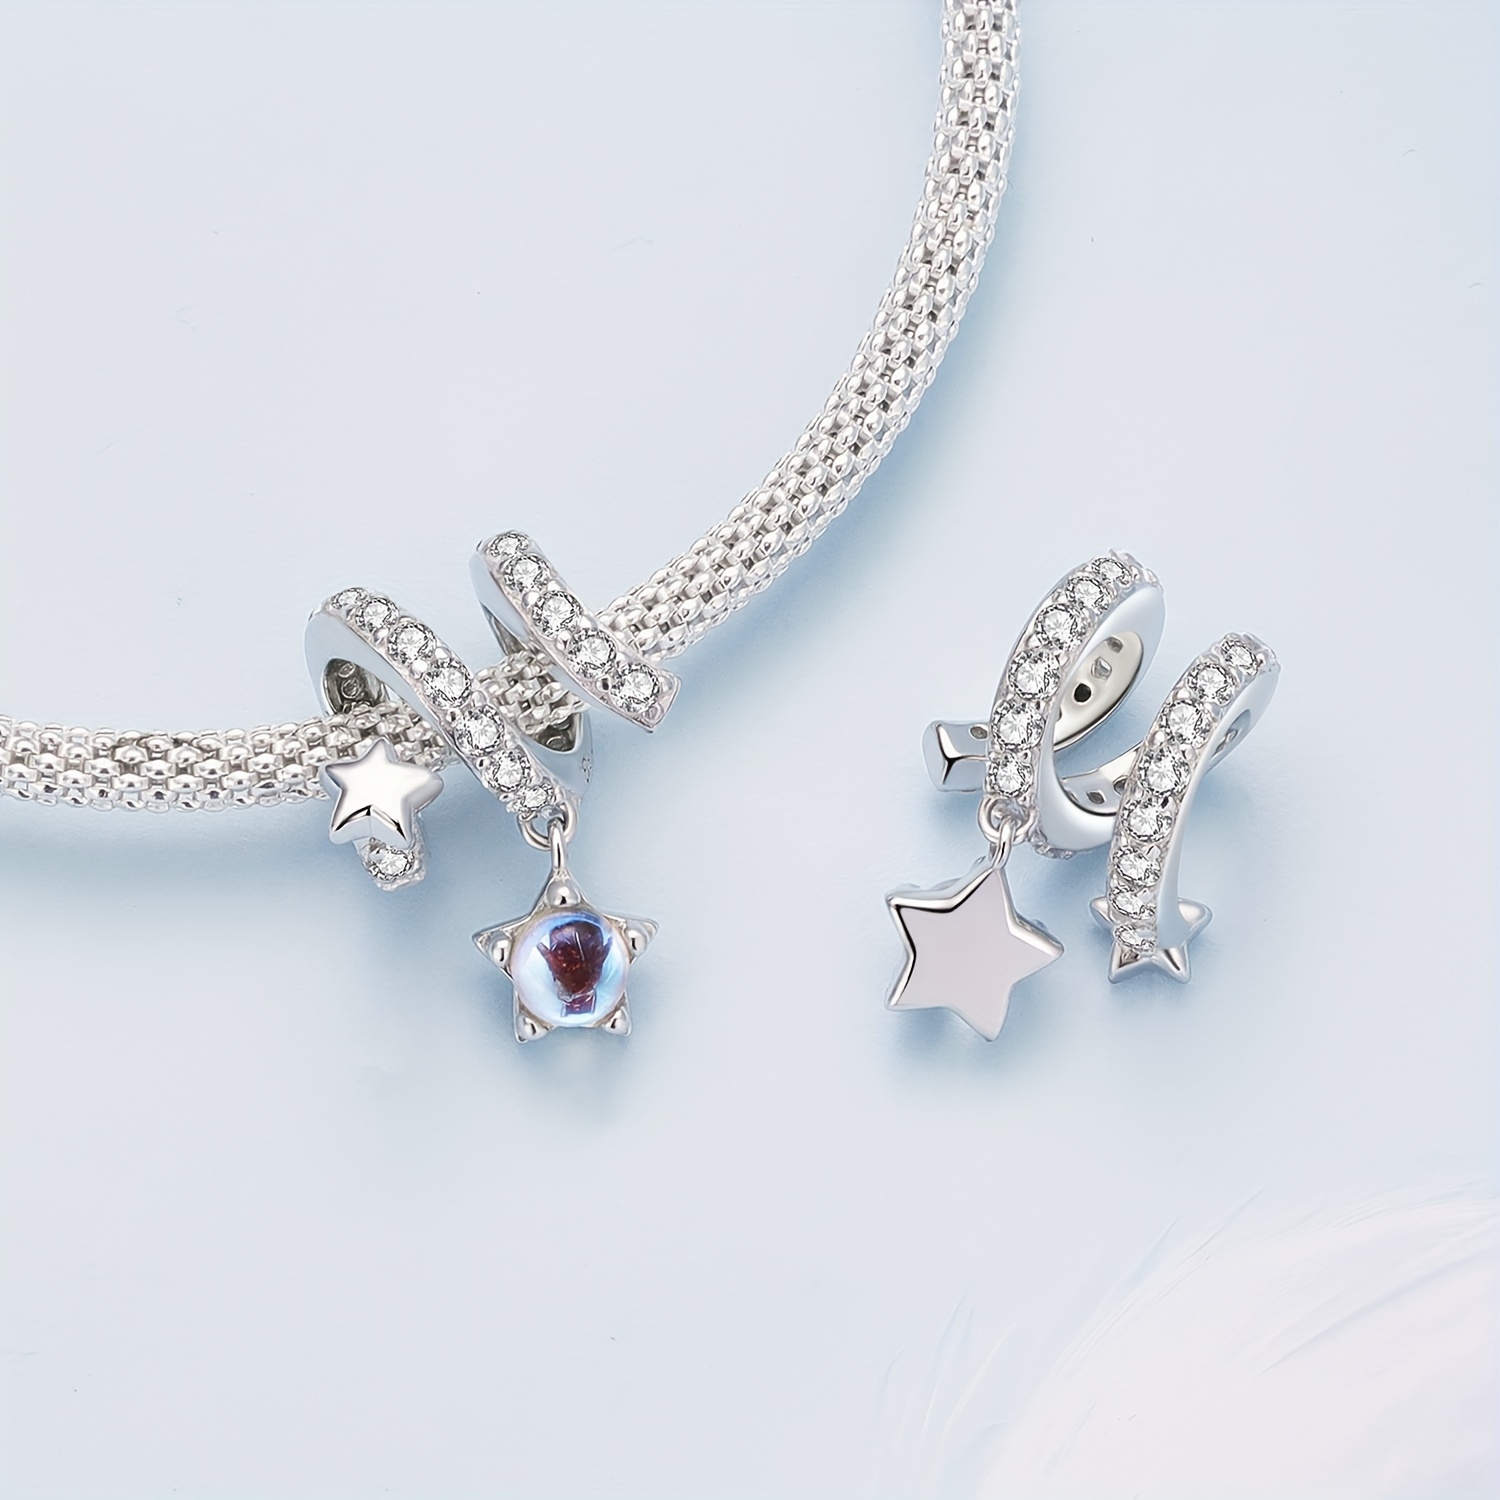 1Pcs New Cute Blue Airplane Moon Fish Pendant Suitable for Pandora Charm  Bracelet Necklace Accessory Women DIY Jewelry Making